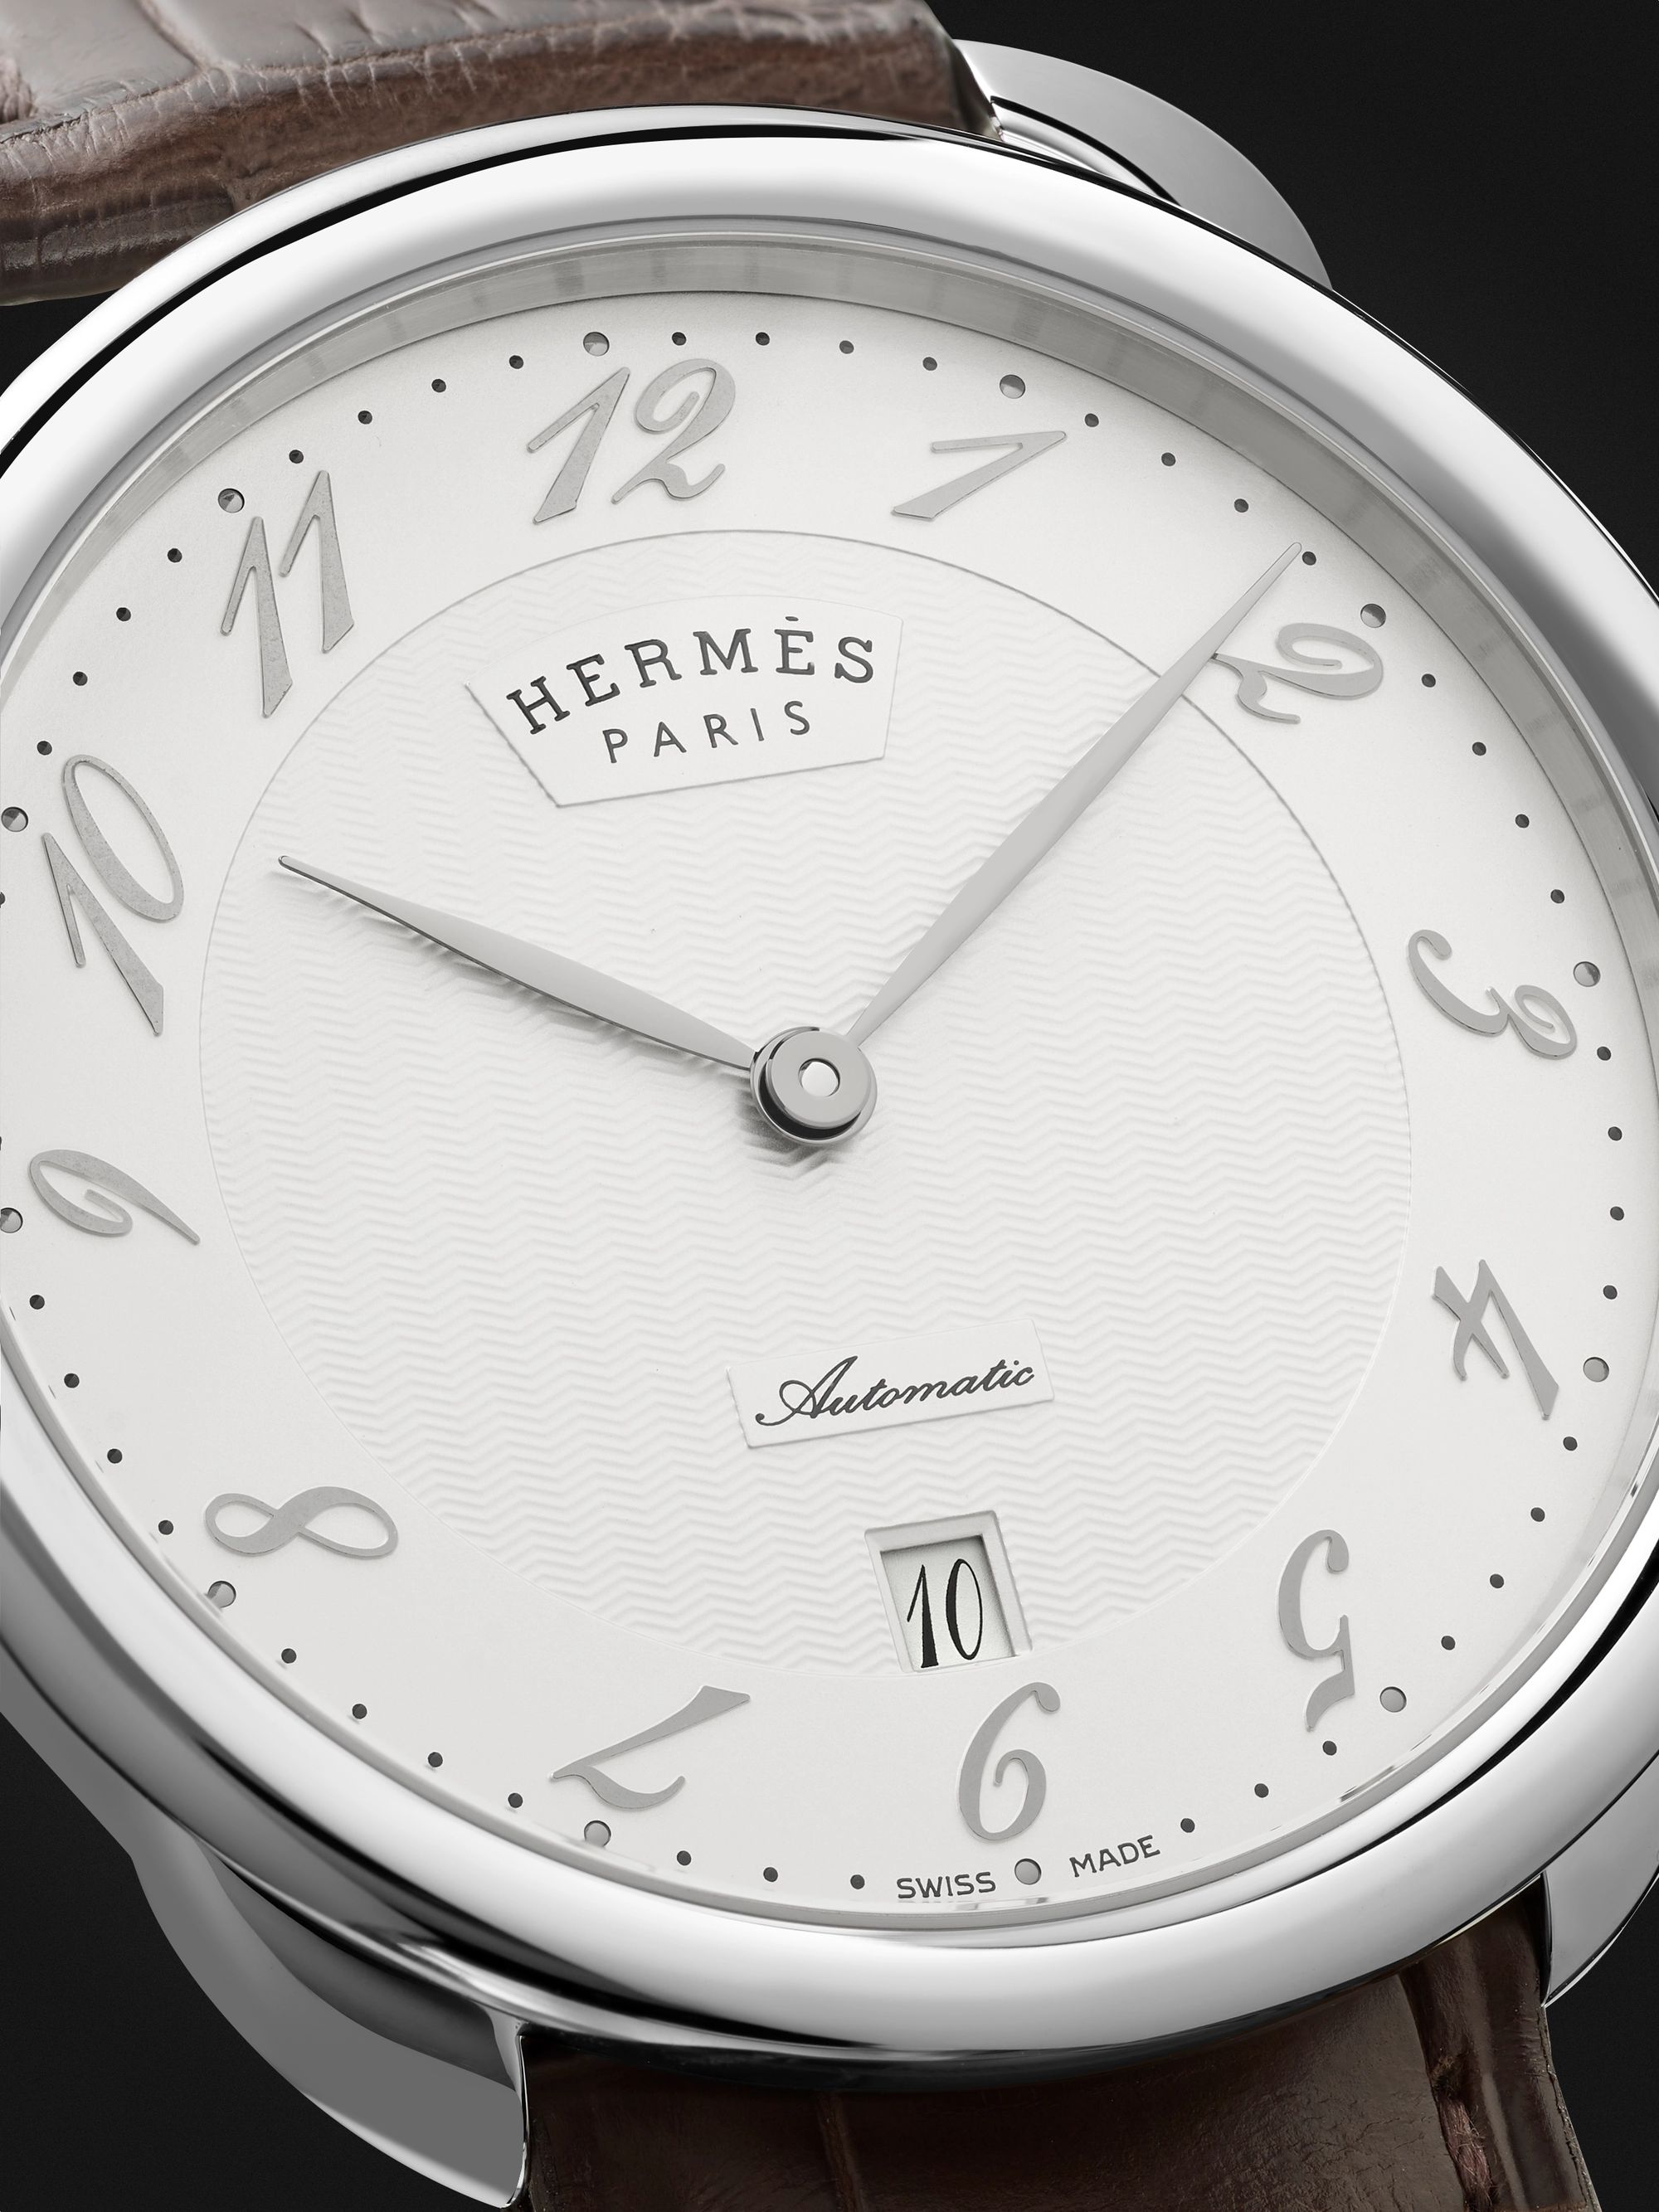 HERMÈS TIMEPIECES Arceau Automatic 40mm Steel and Alligator Watch, Ref. No. 055562WW00